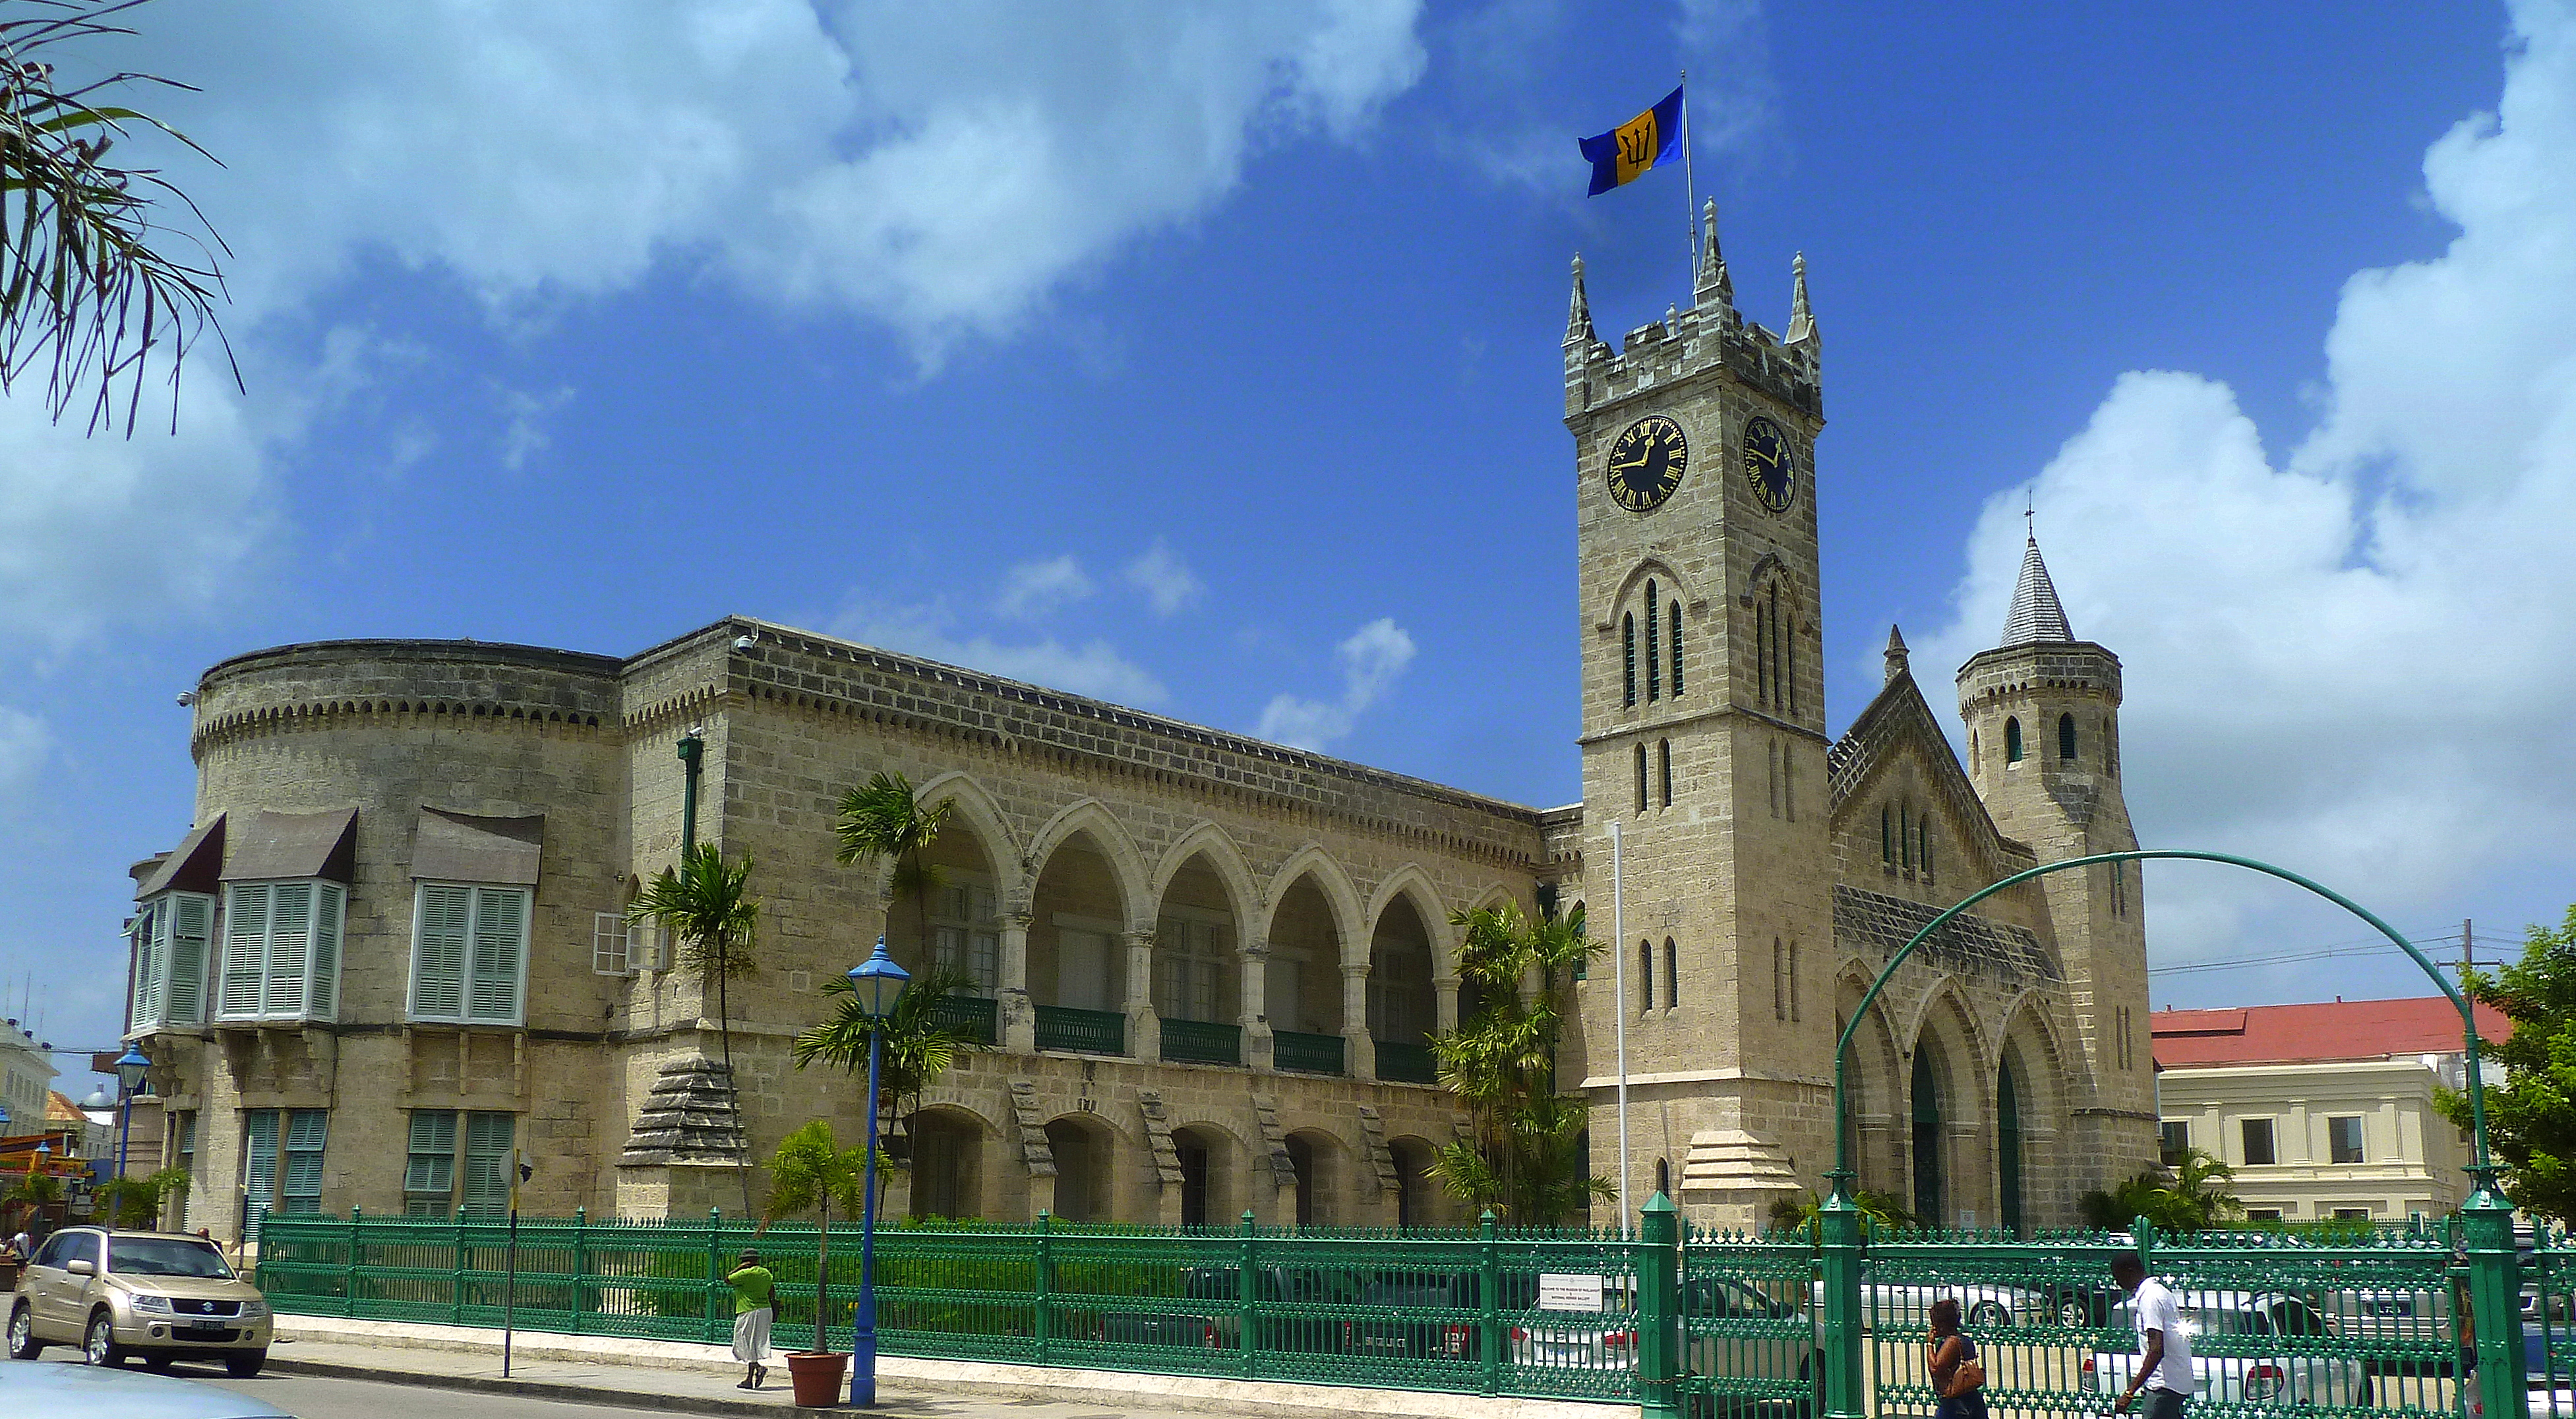 Parliament Buildings (Barbados) - Wikipedia